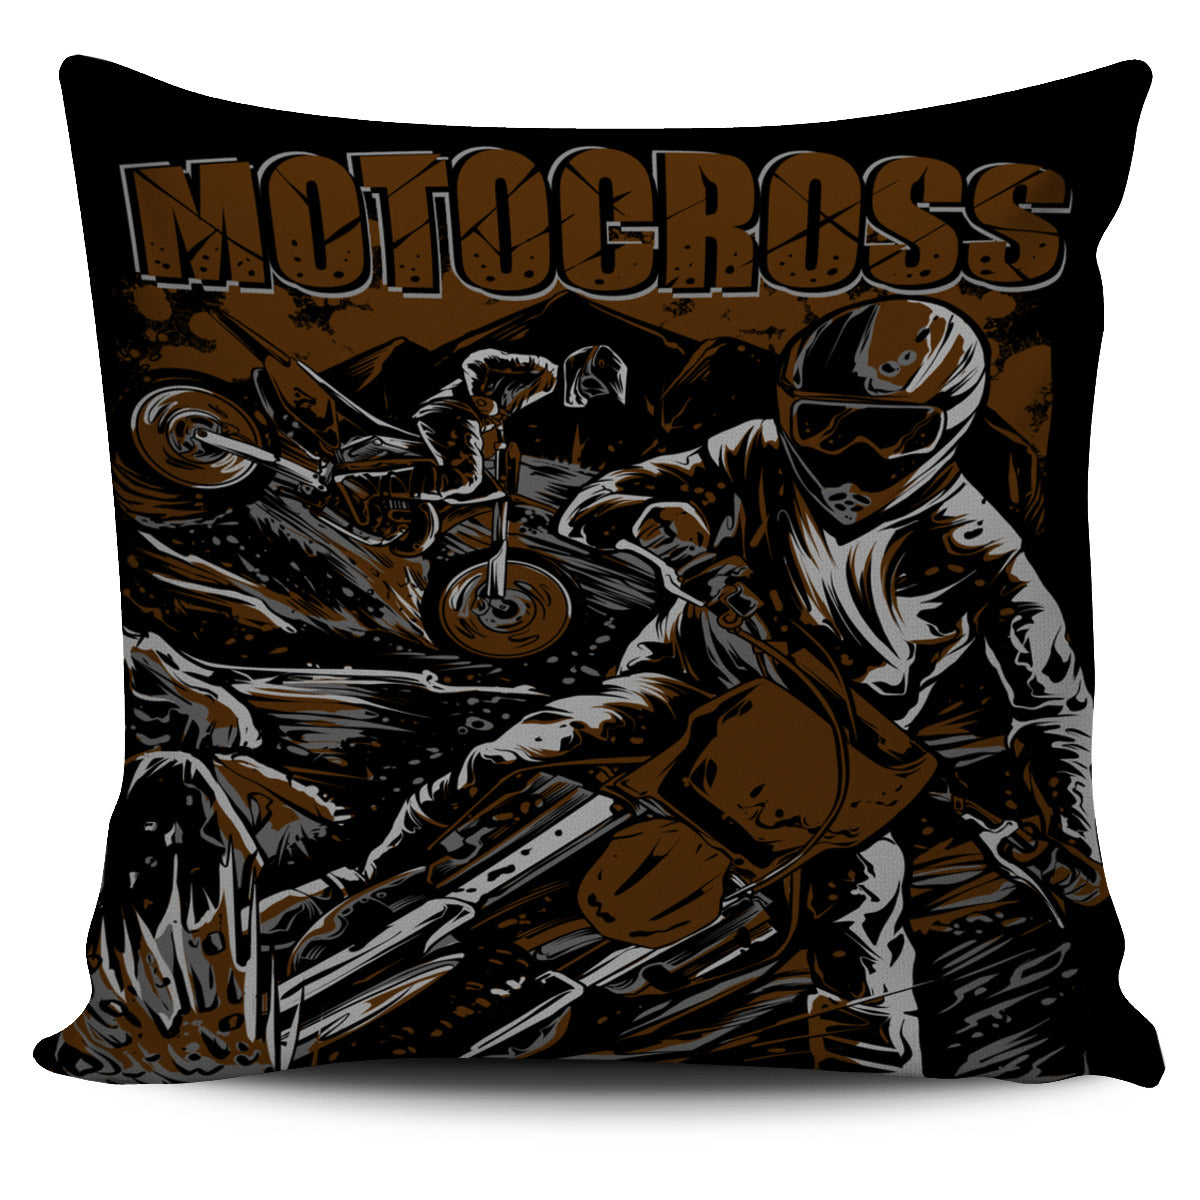 Motocross Pillow Cover